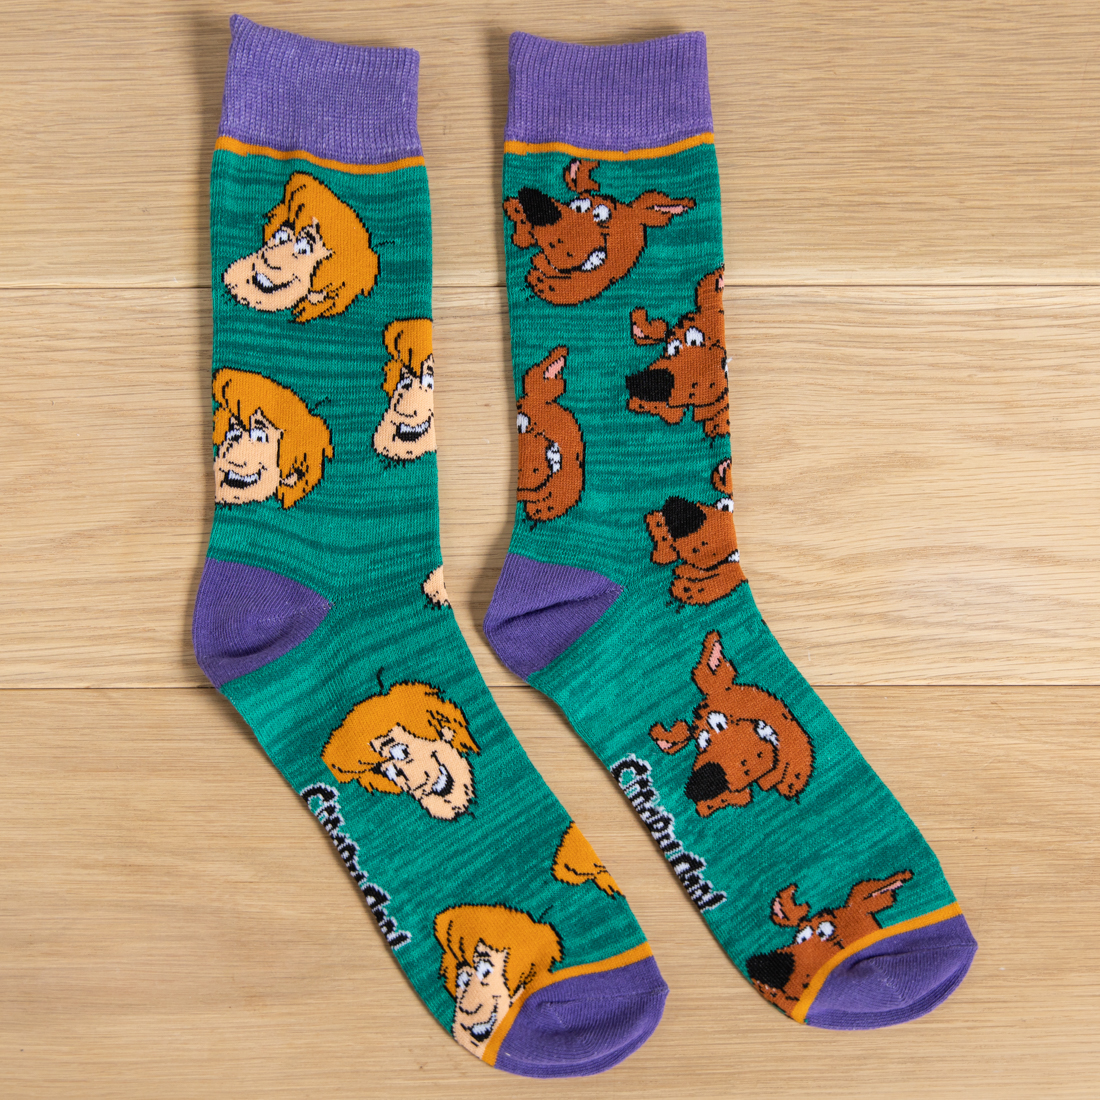 Scooby Doo and Shaggy Socks - Cracker Barrel